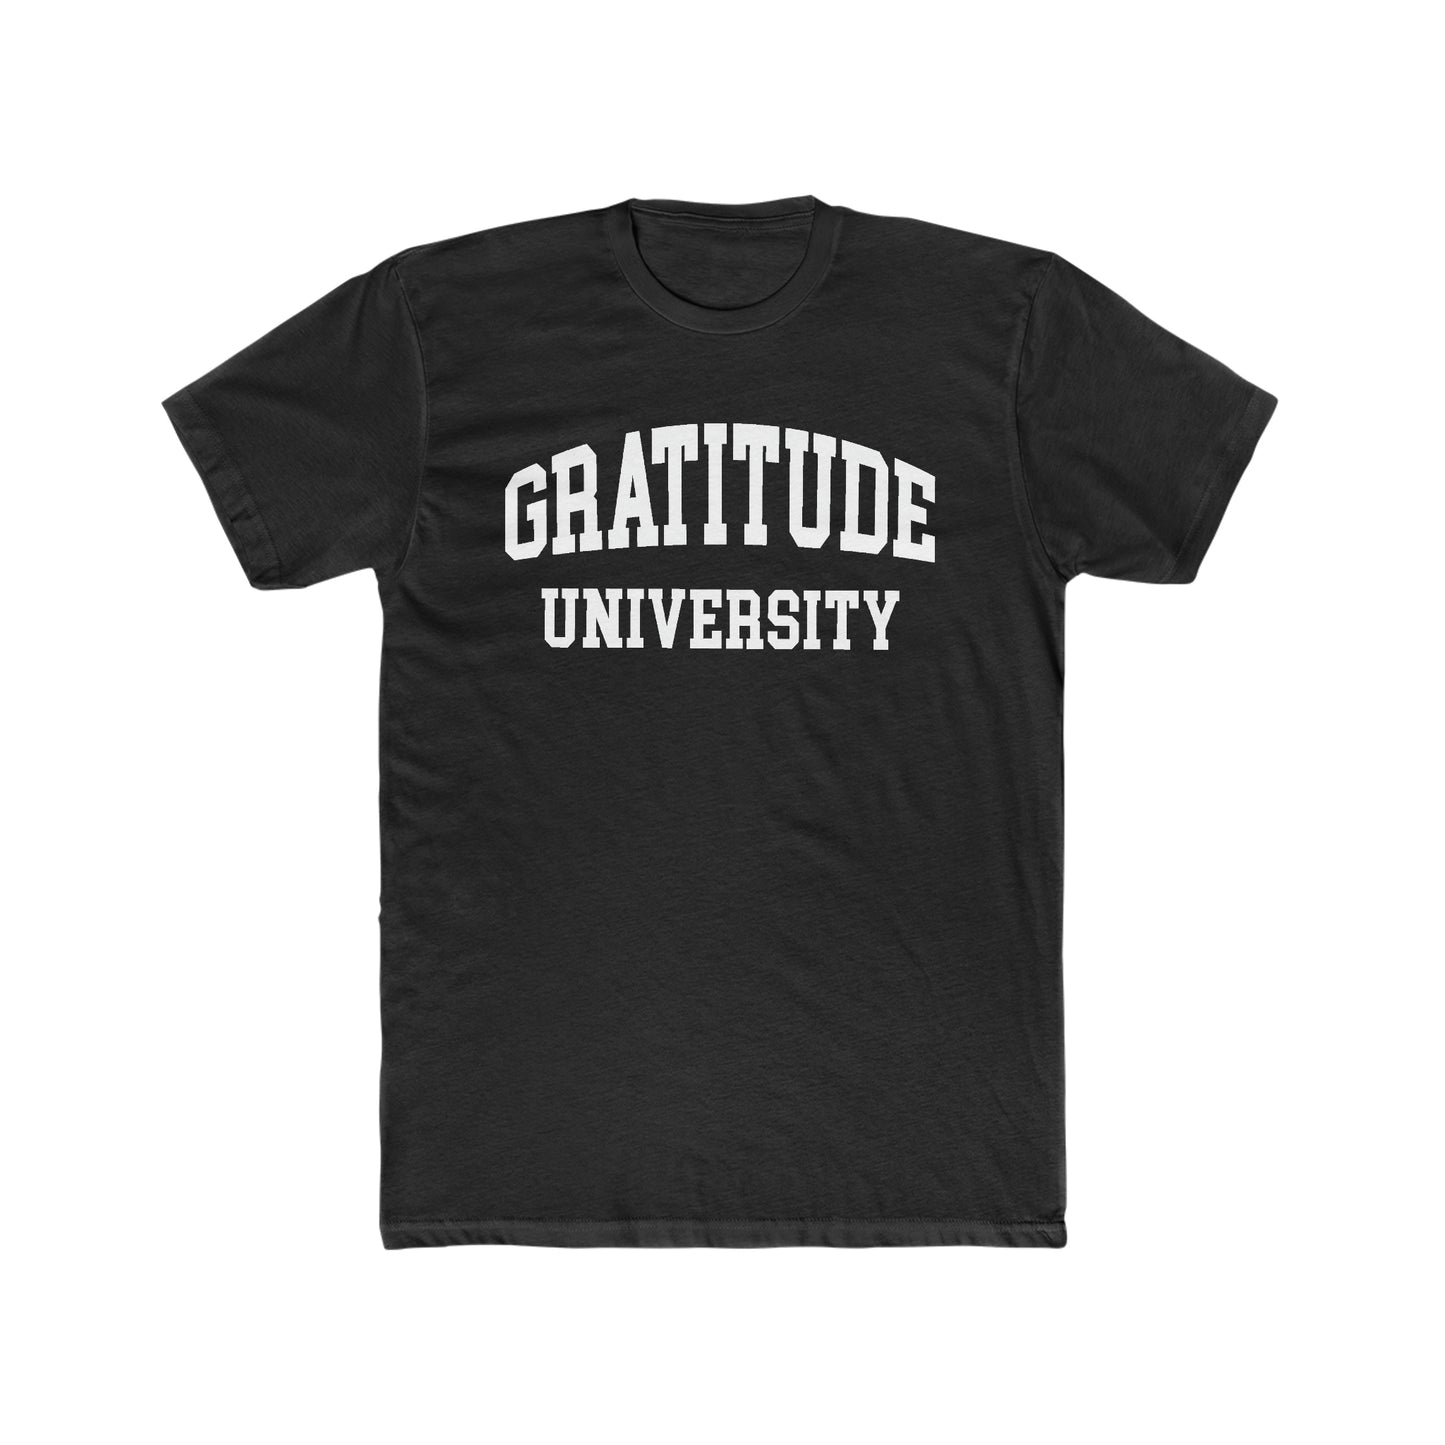 "Gratitude University" Tee